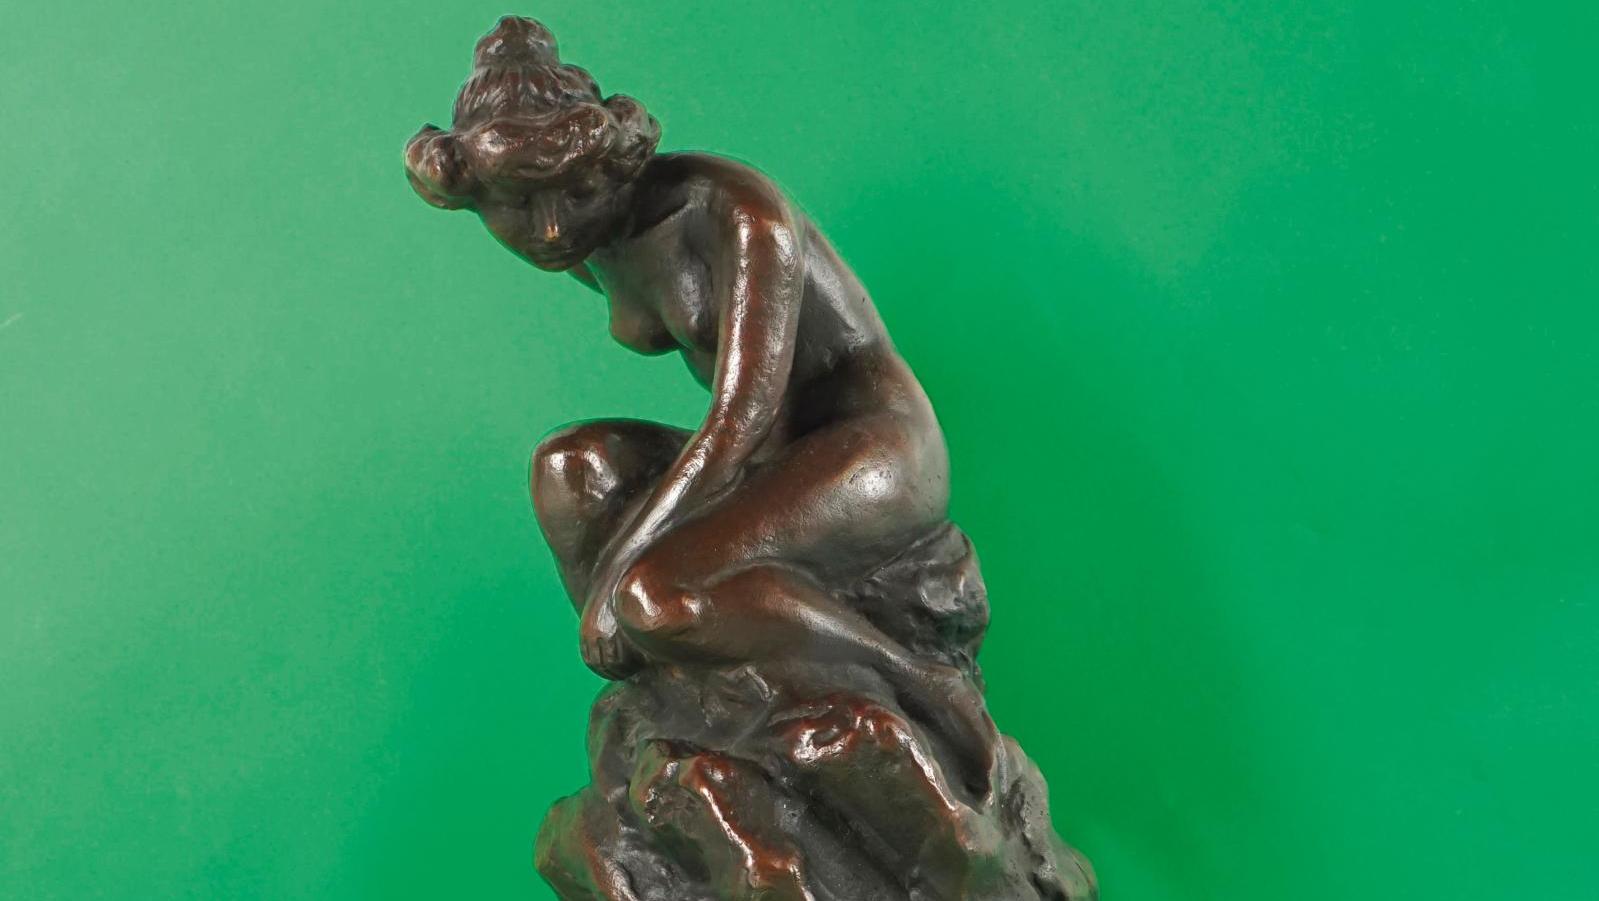 Alfons Mucha (1860-1939), Femme au rocher, sculpture en bronze à patine brune, signée... Alfons Mucha en volumes